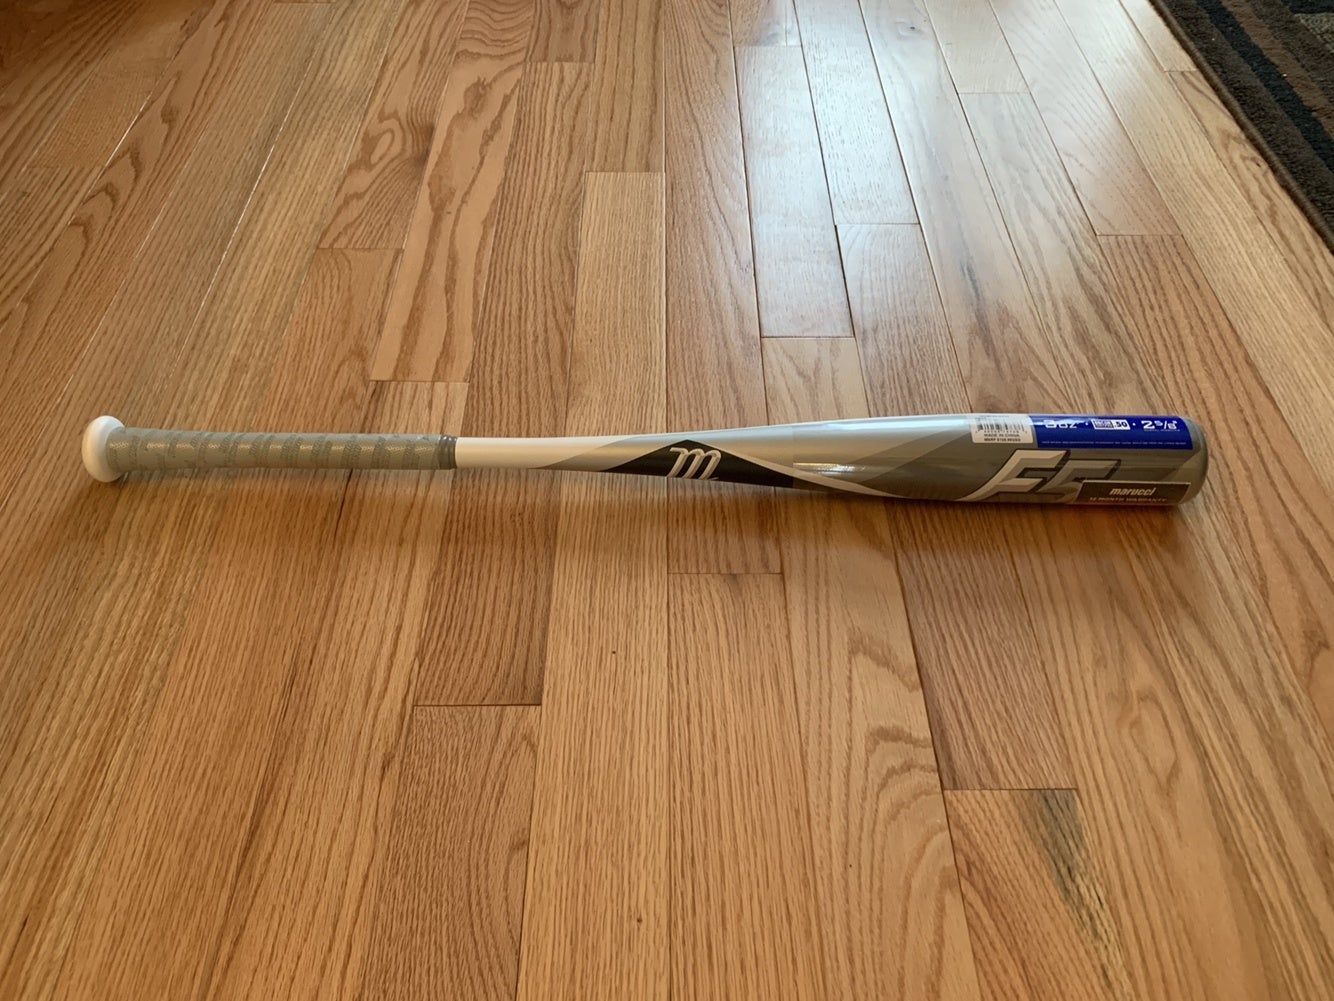 Details about   Marucci F5 Baseball Bat Size 33/30 